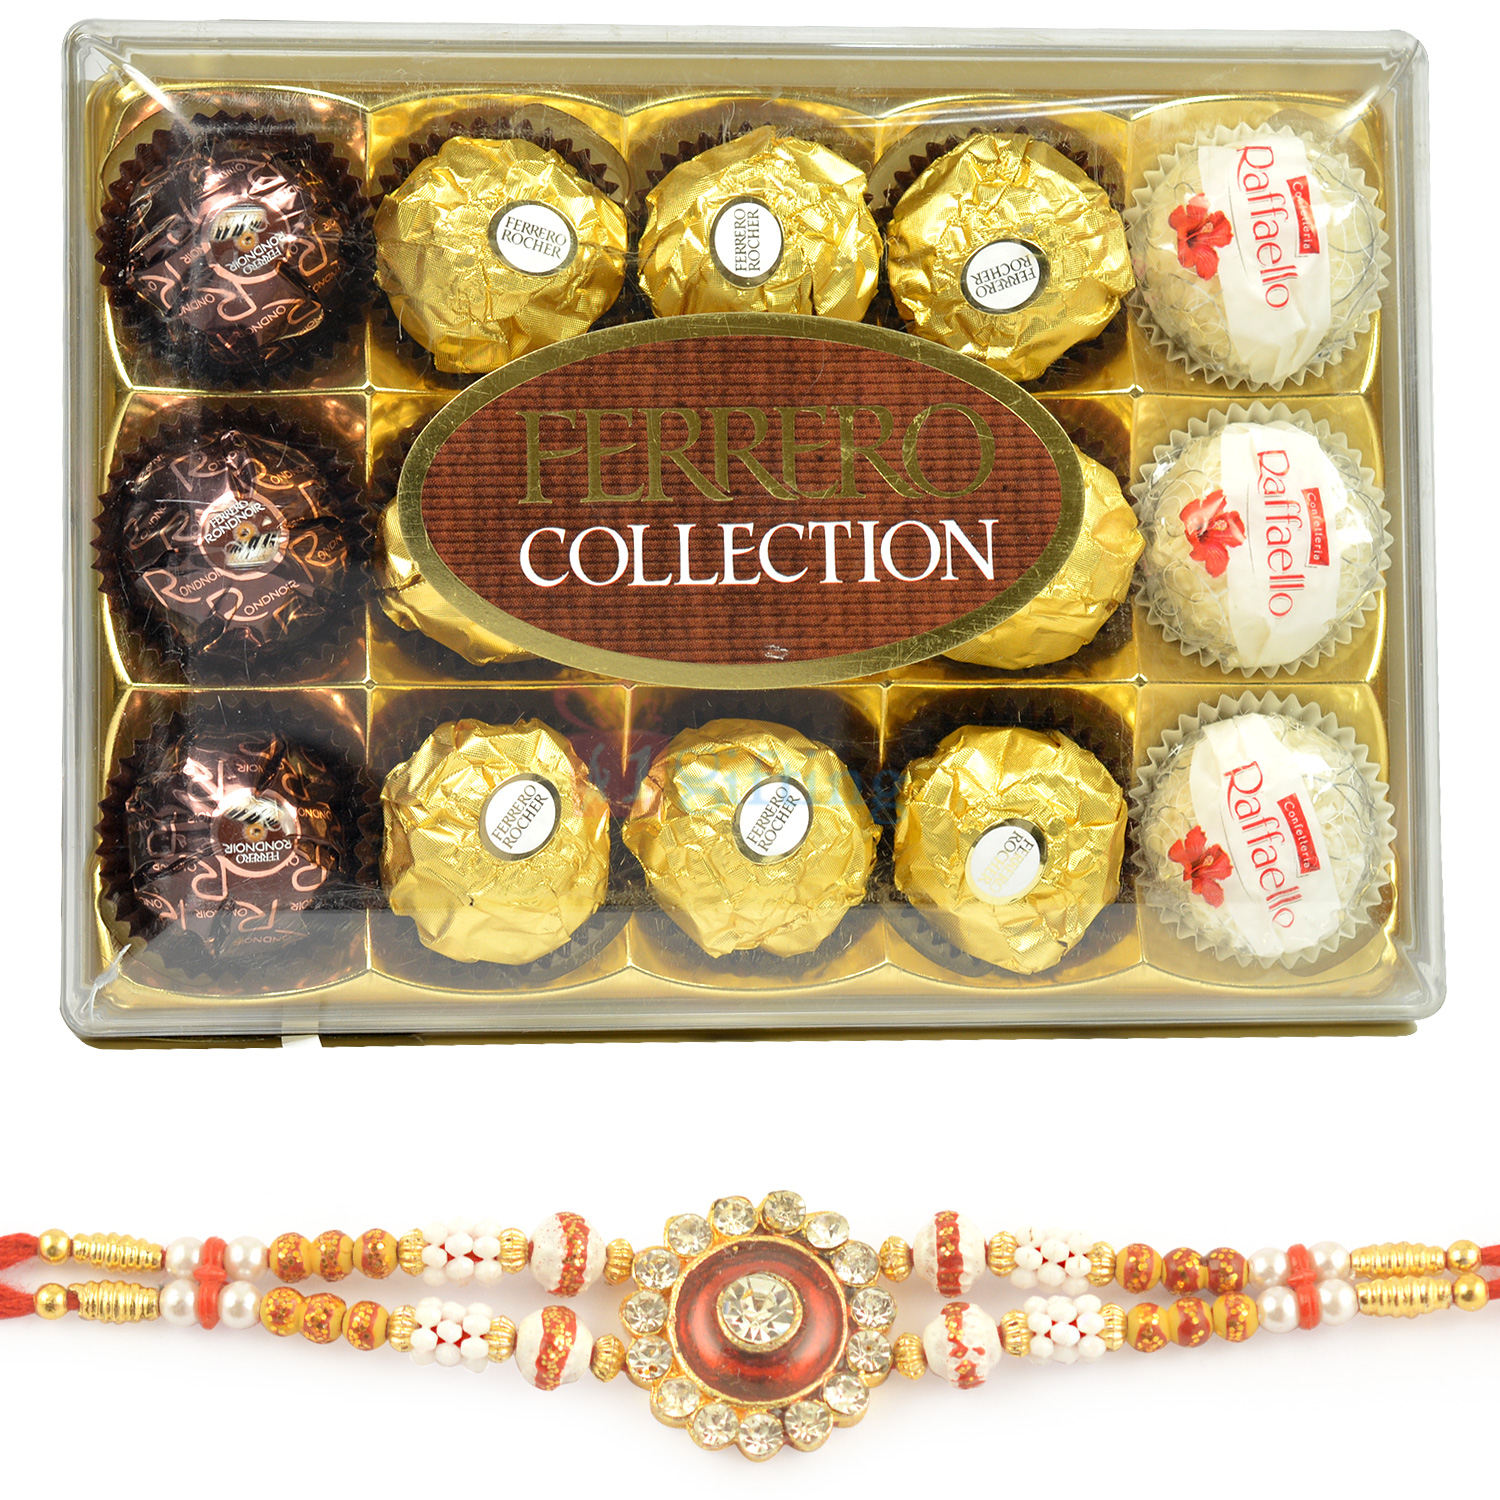 T-15 Box of Ferrero Collection Chocolate Box with Diamond Rakhi Set